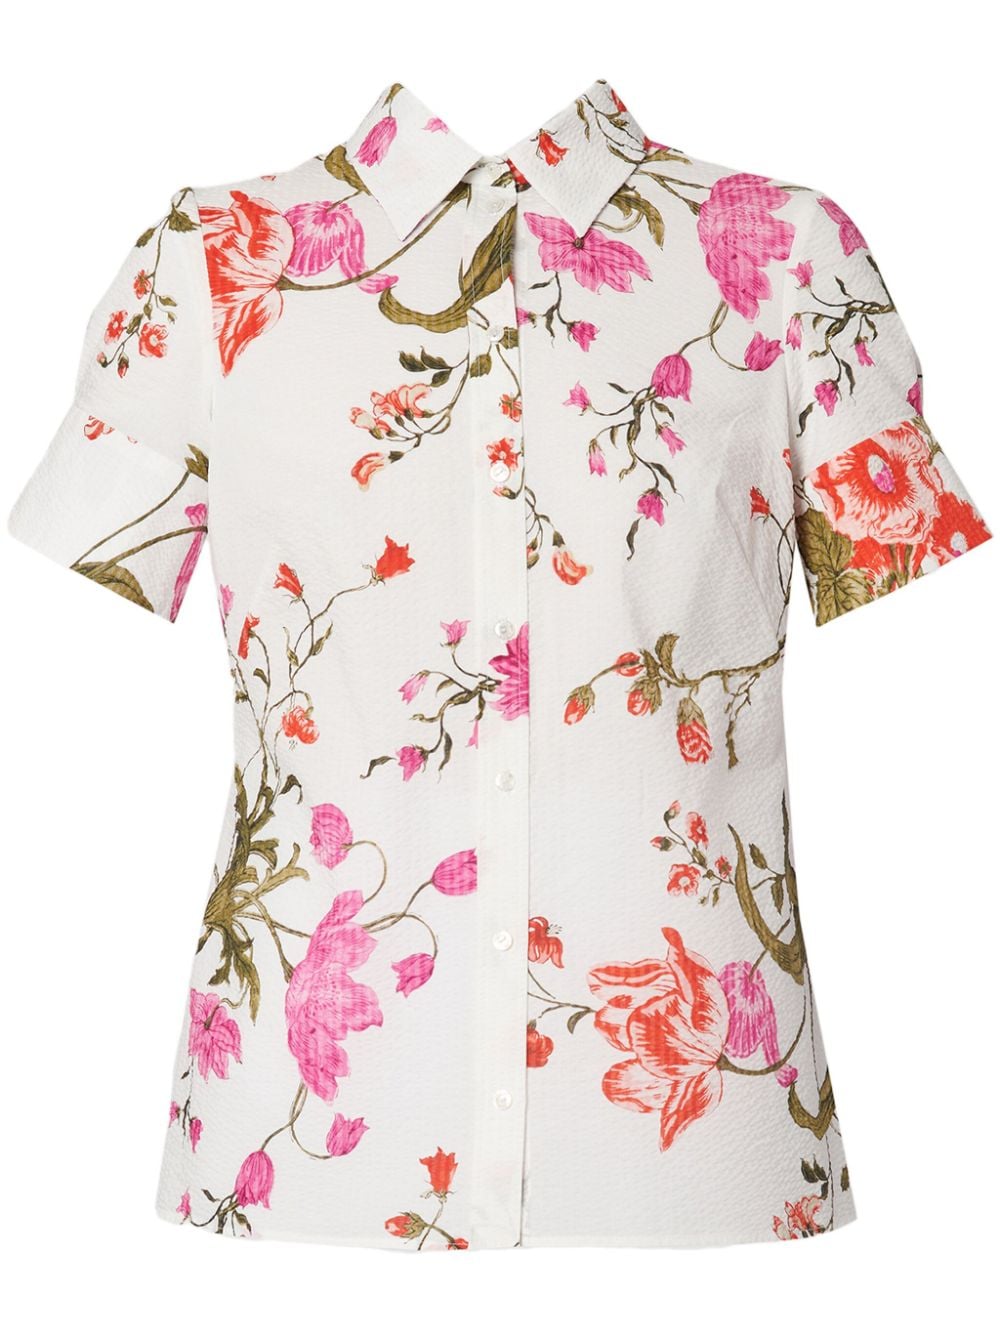 ERDEM floral-print seersucker shirt - White